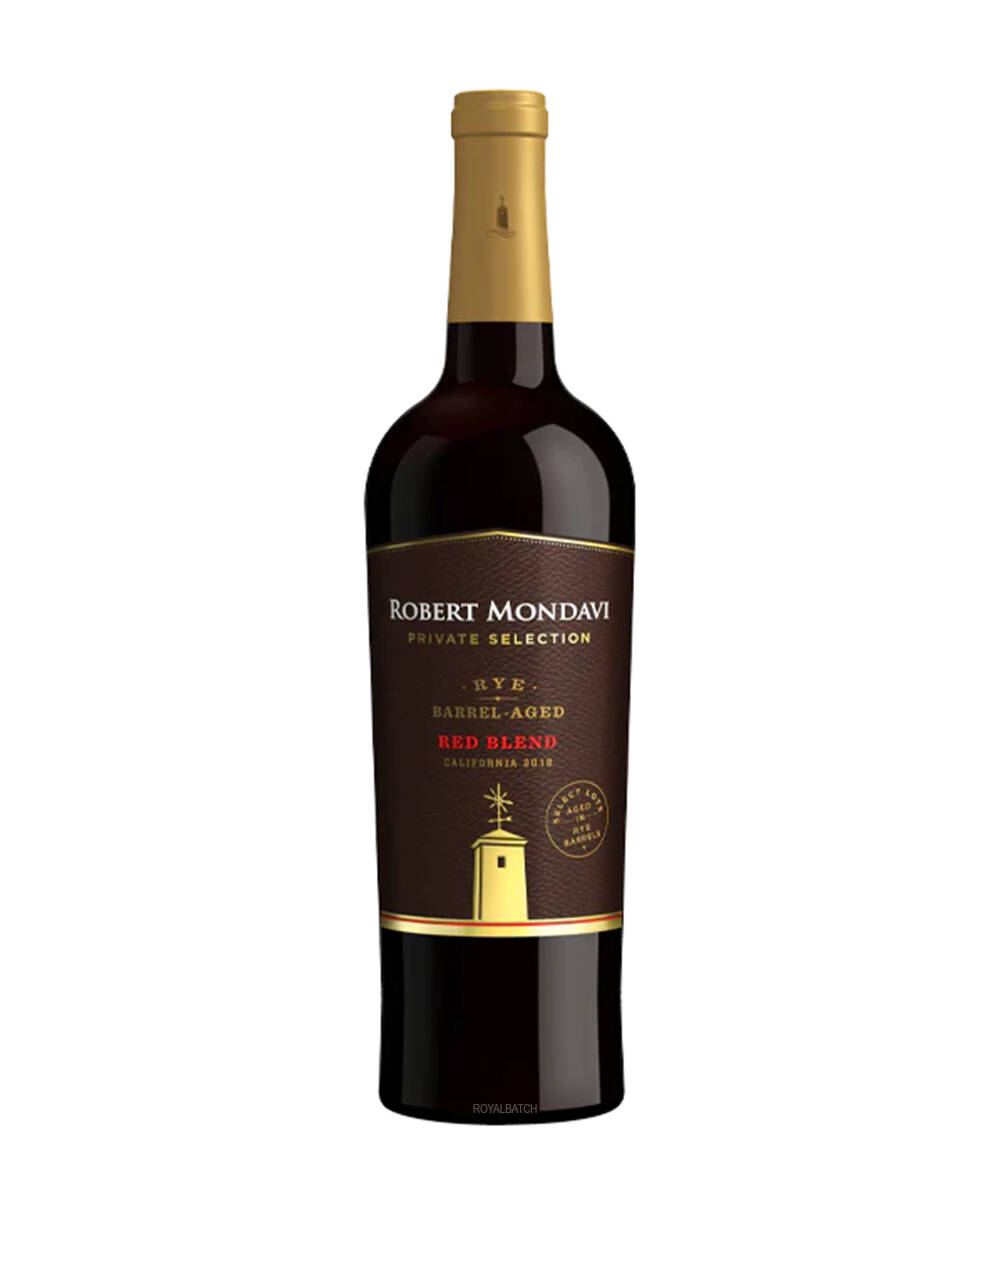 Robert Mondavi Private Selection Rye Barrel Aged Red Blend Wine 2019